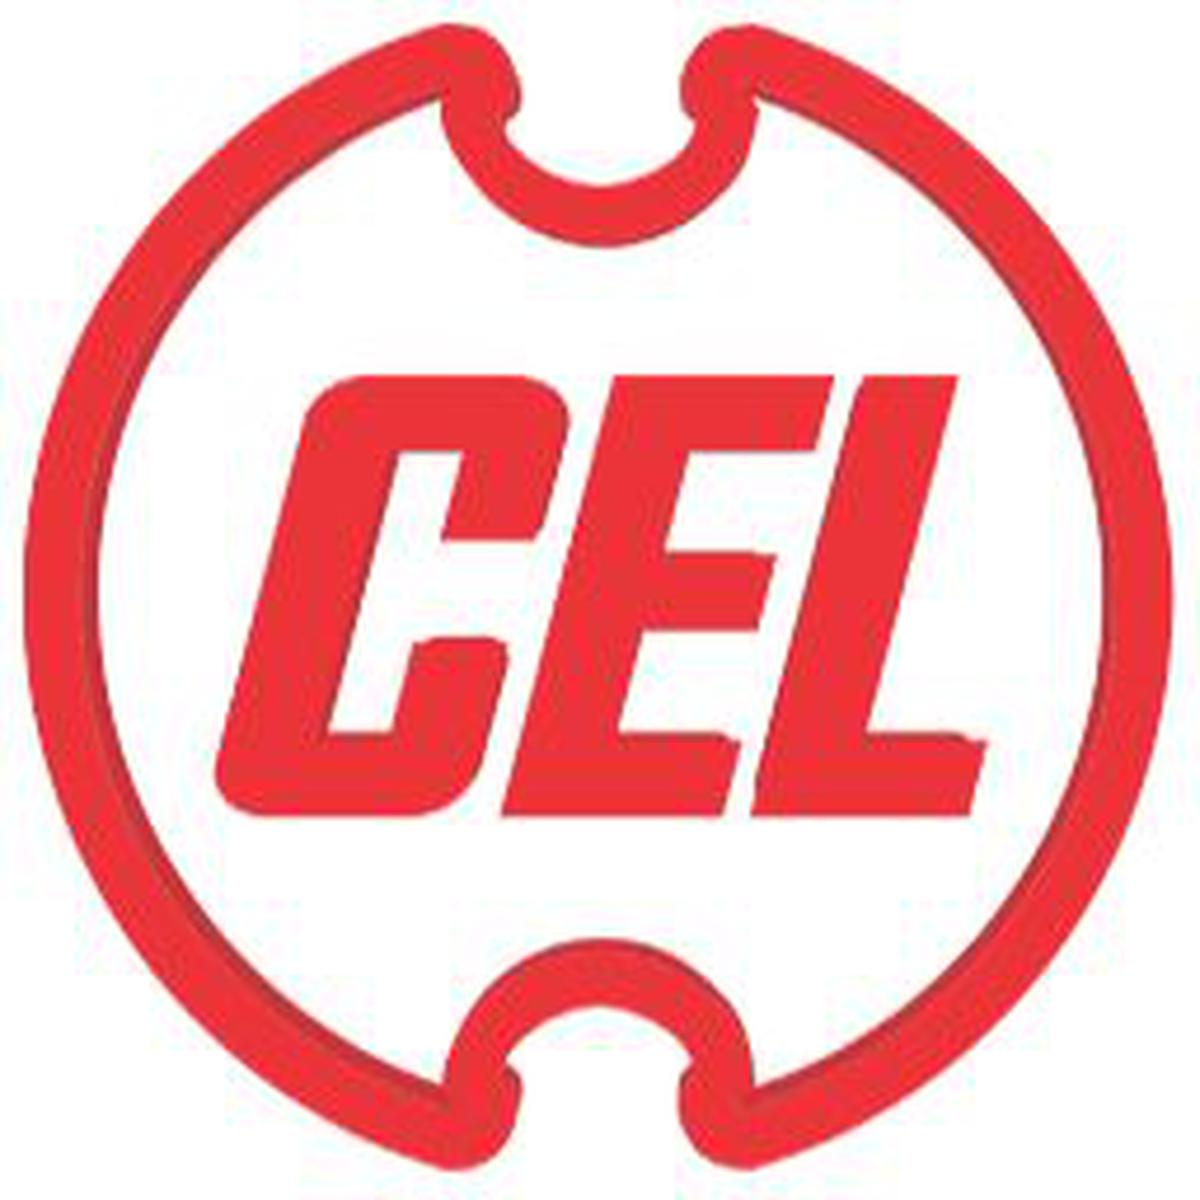 Electronics limited. ICL логотип. Цельс лого. Filshu Electronics co Limited логотип. Цельс logo PNG.